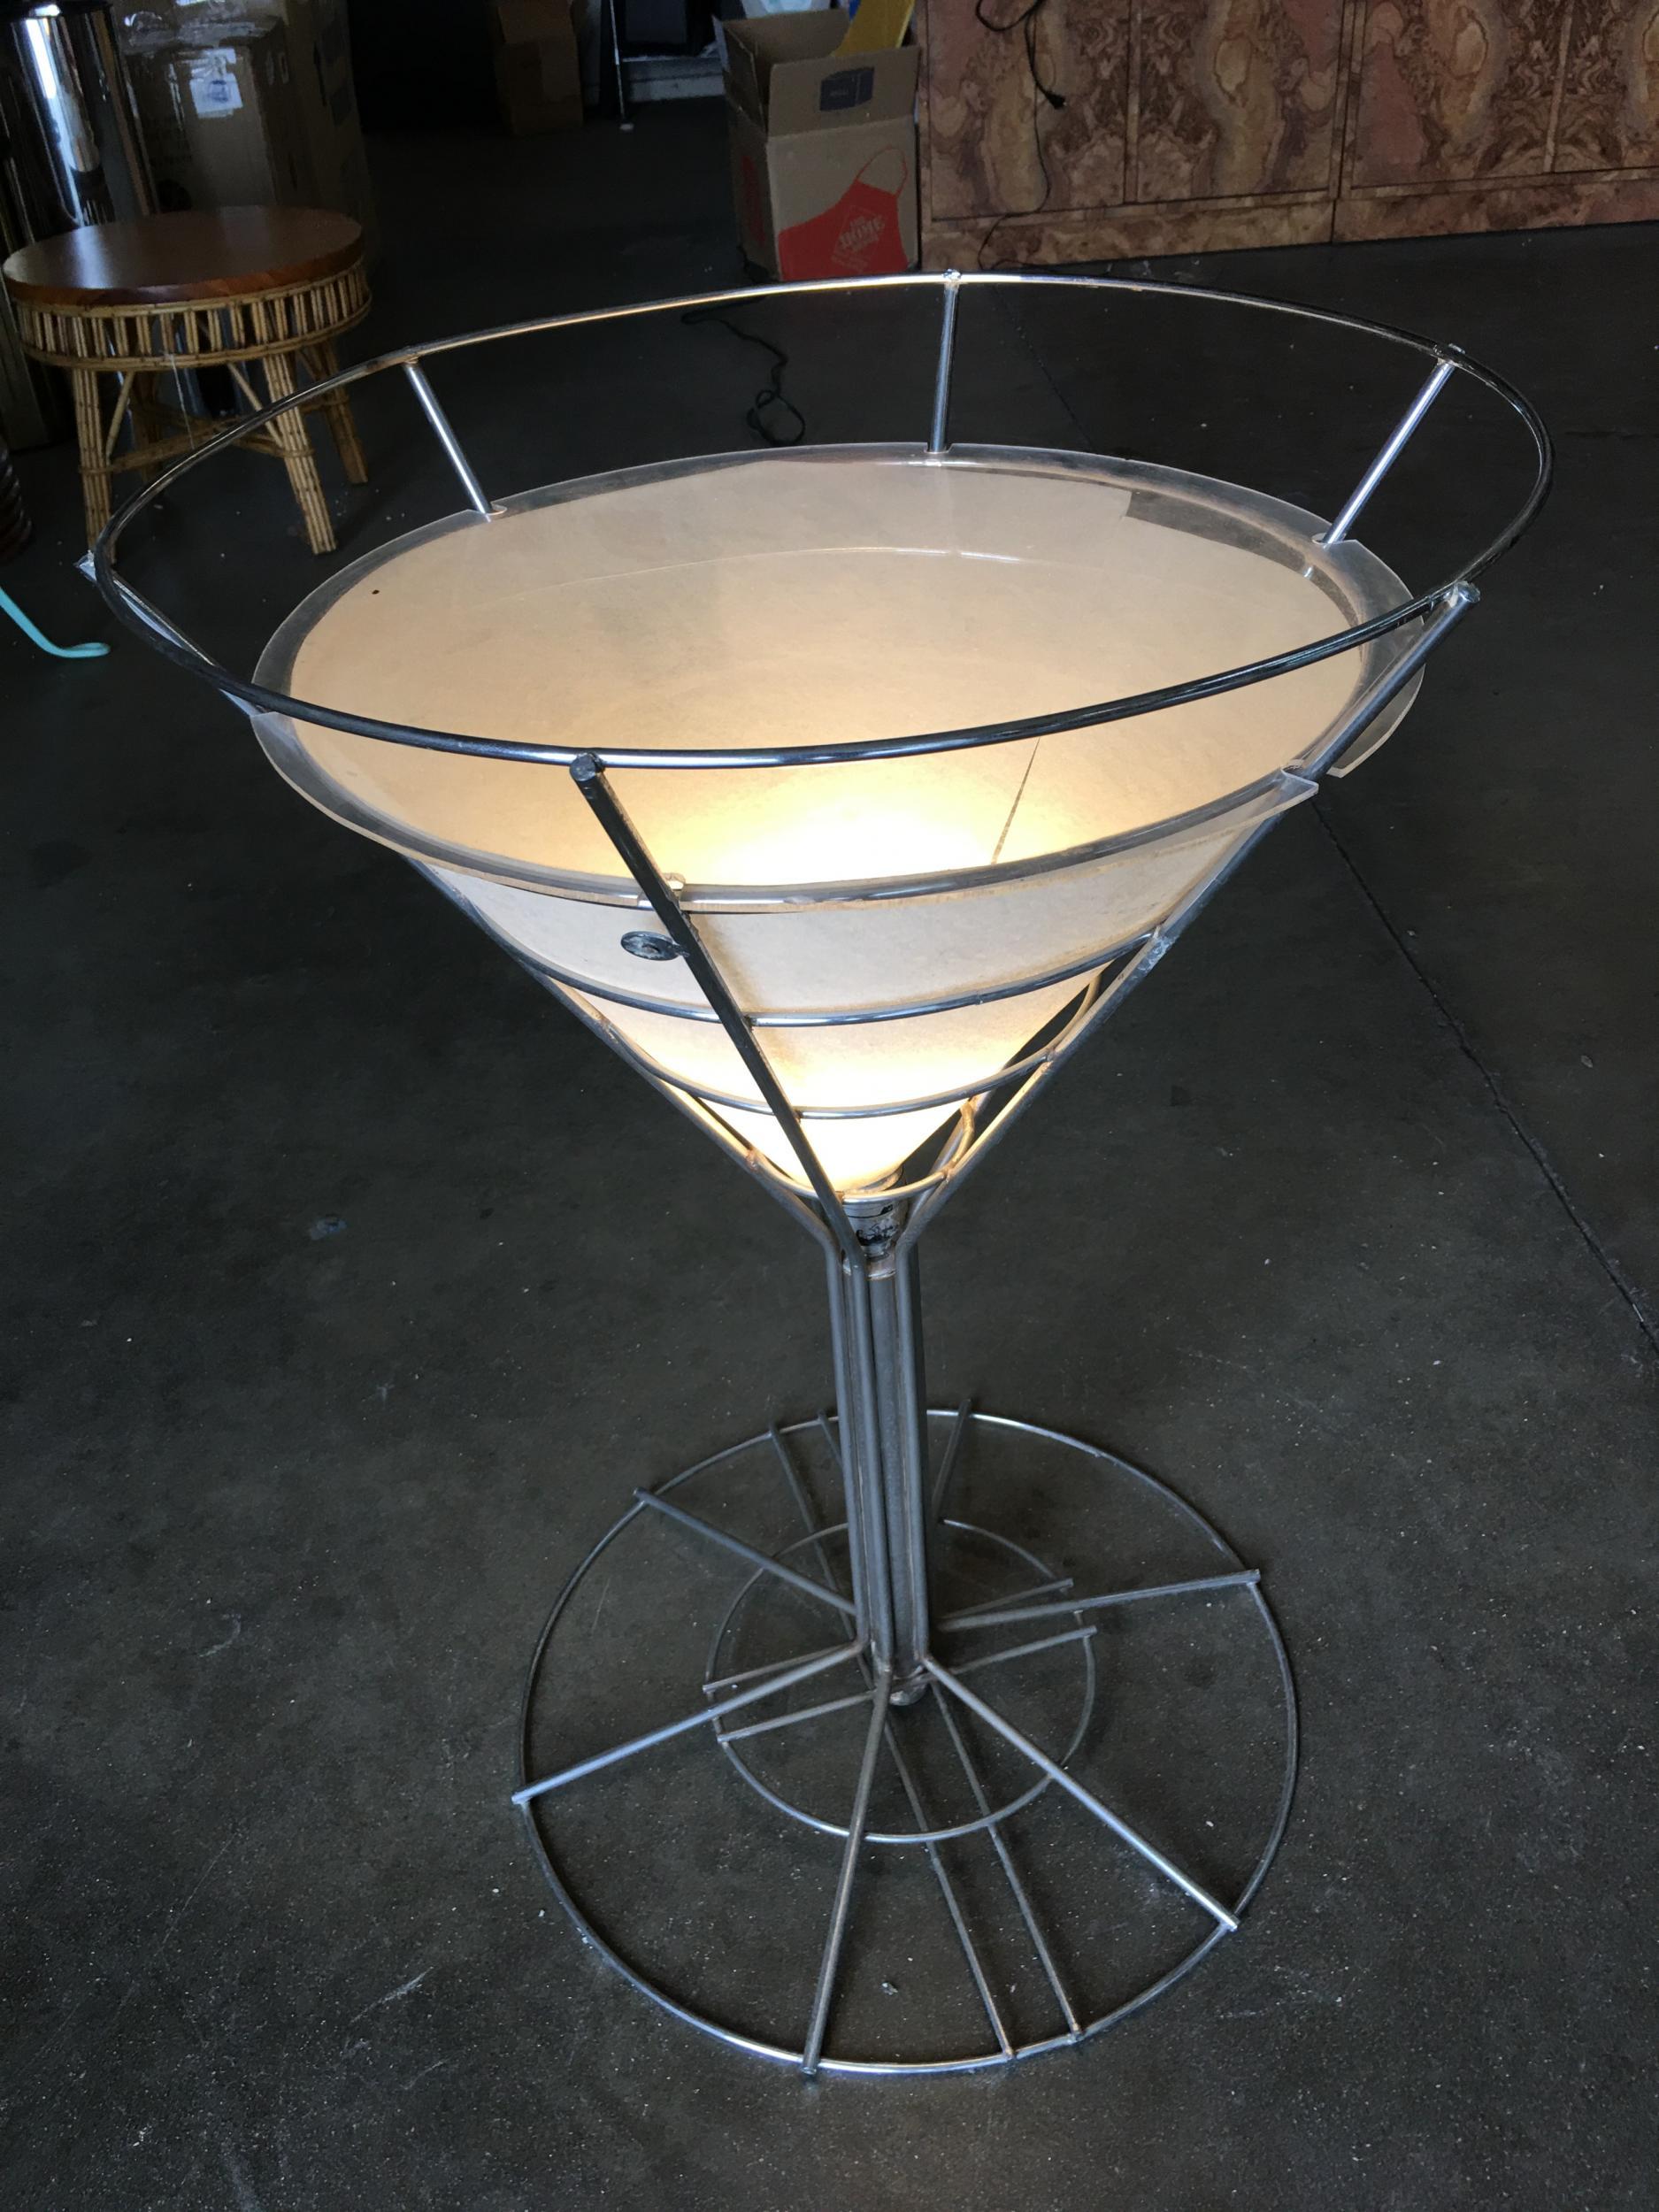 martini glass shaped table